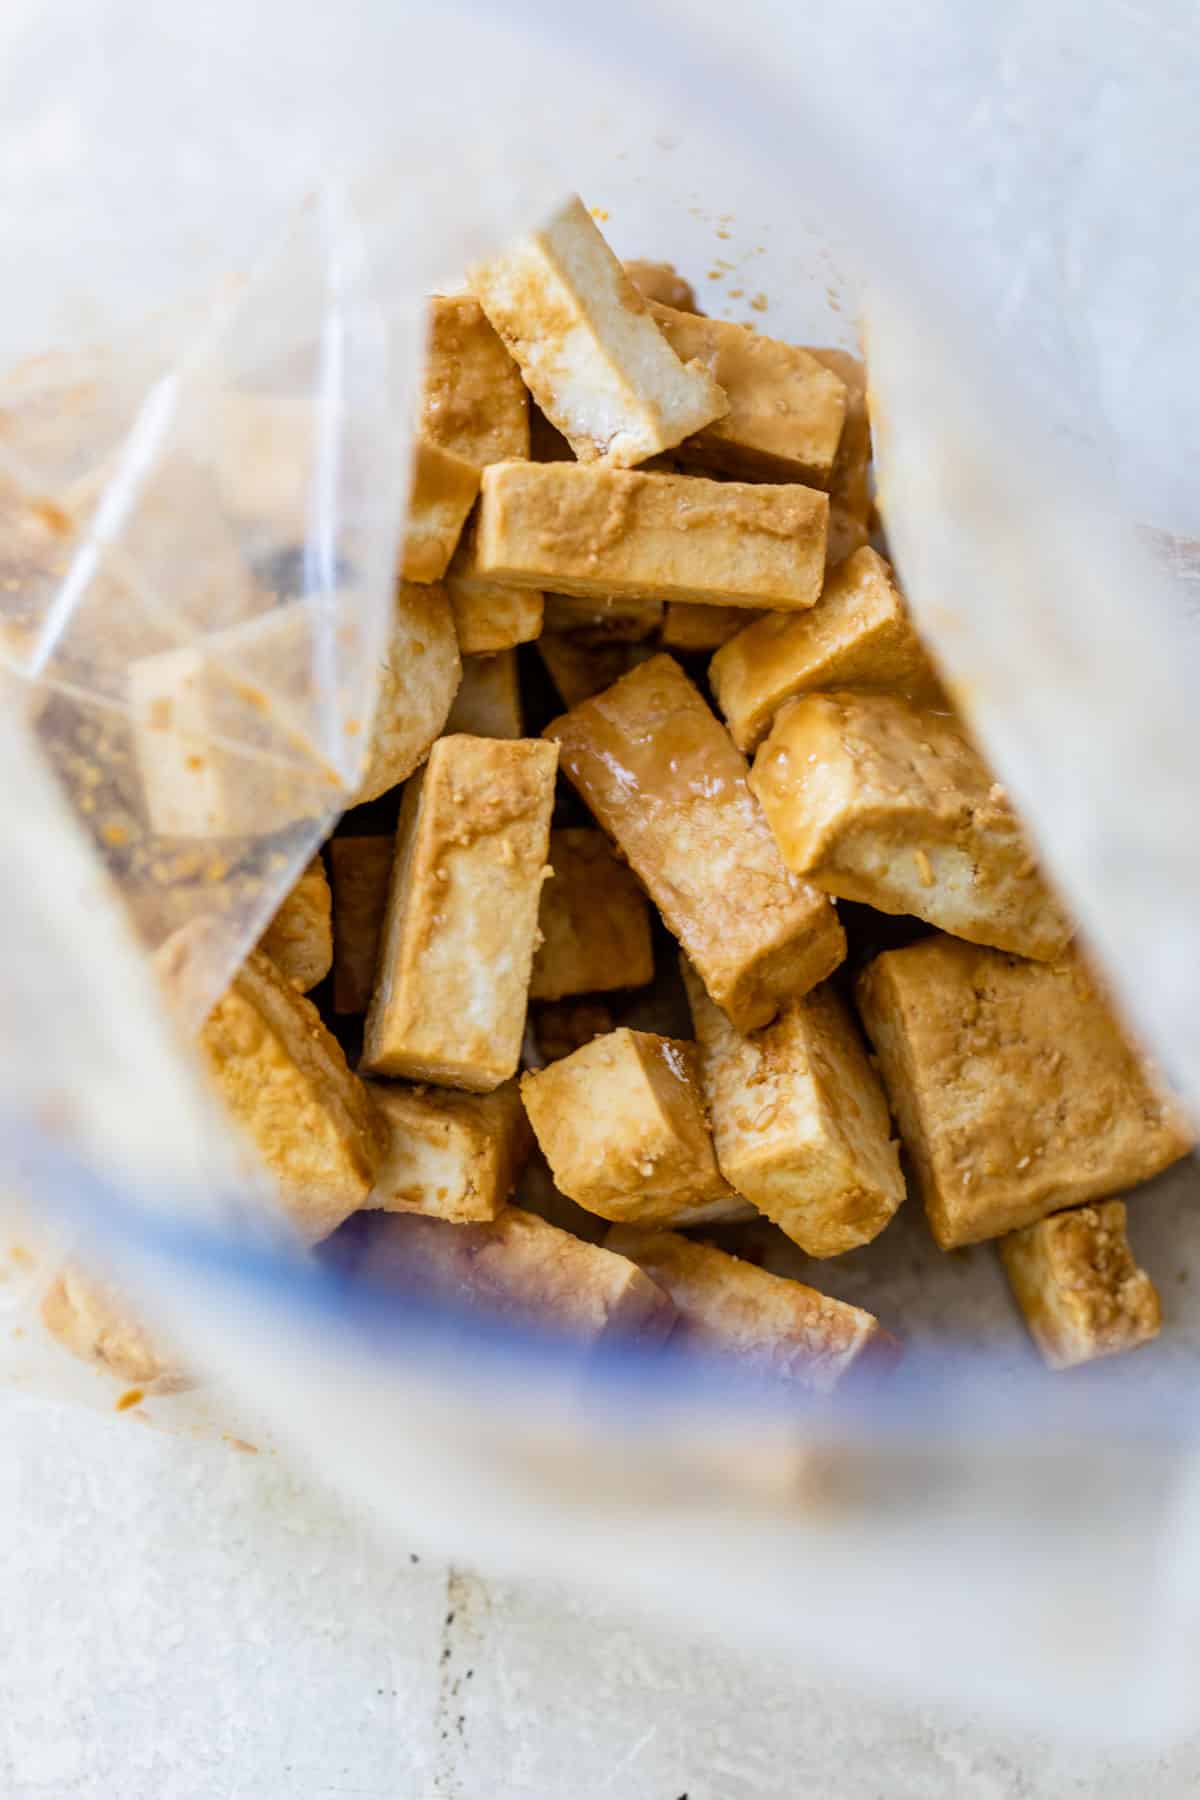 marinated tofu in a plastic bag